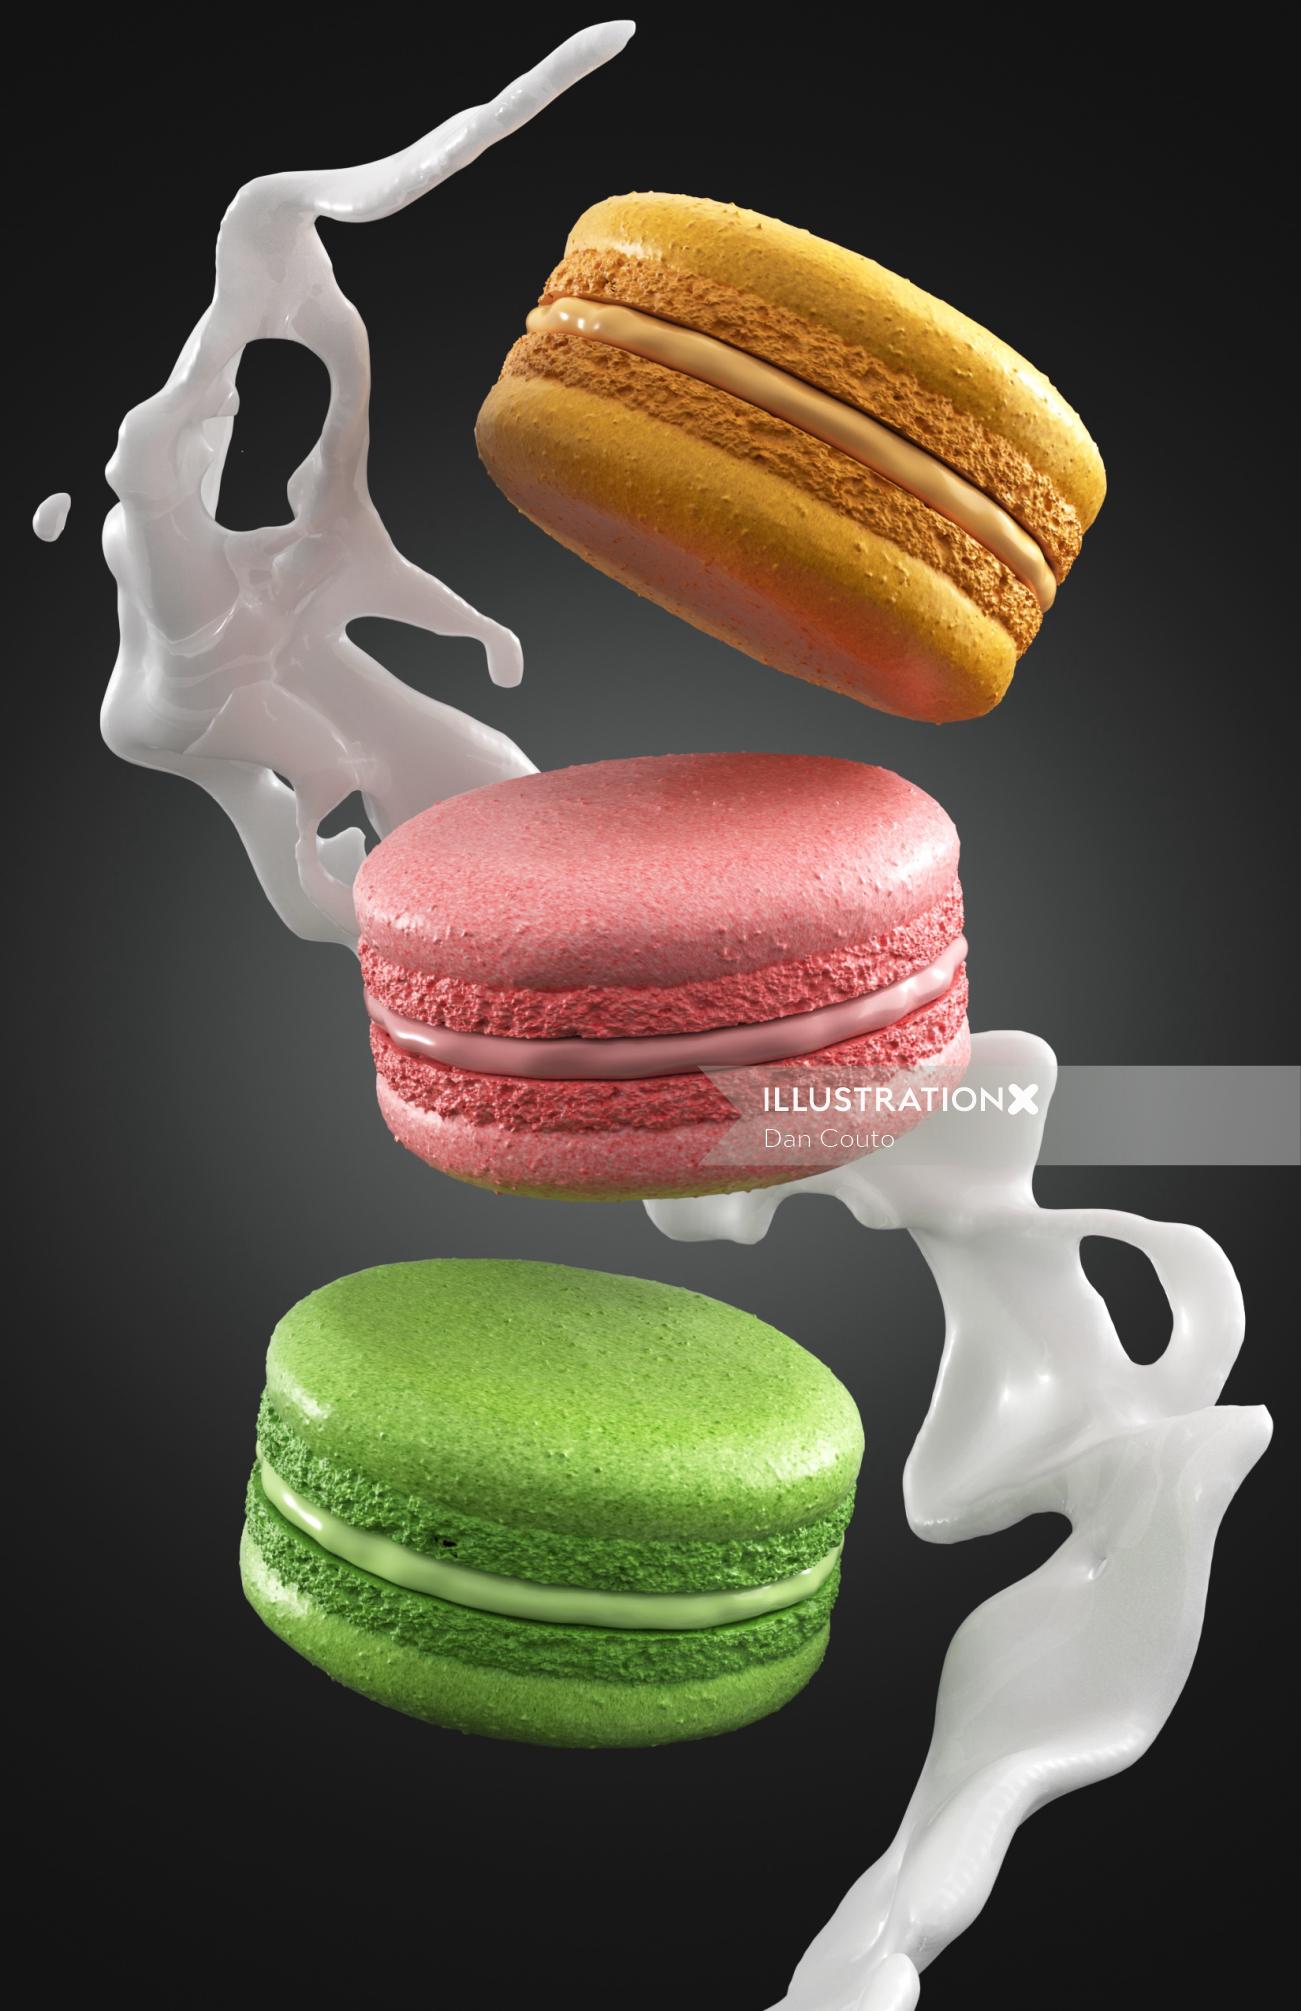 CGI rendering of a macaron